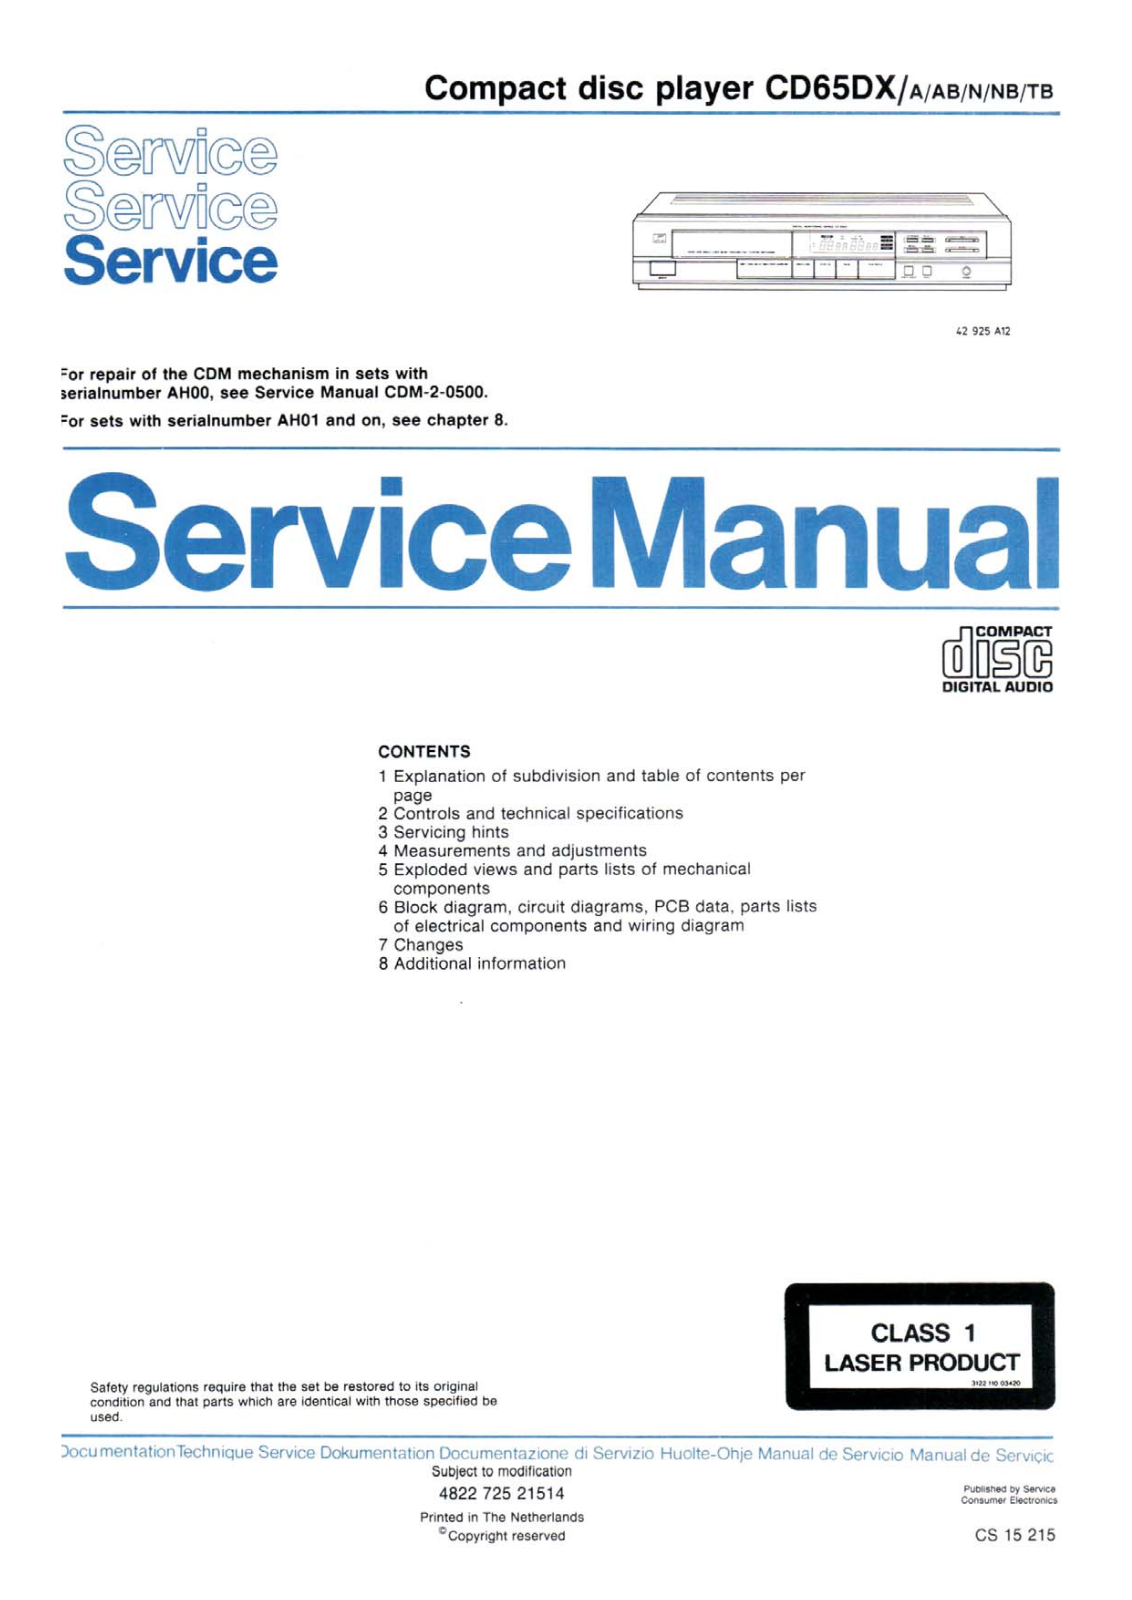 Marantz CD-65-DX Service Manual